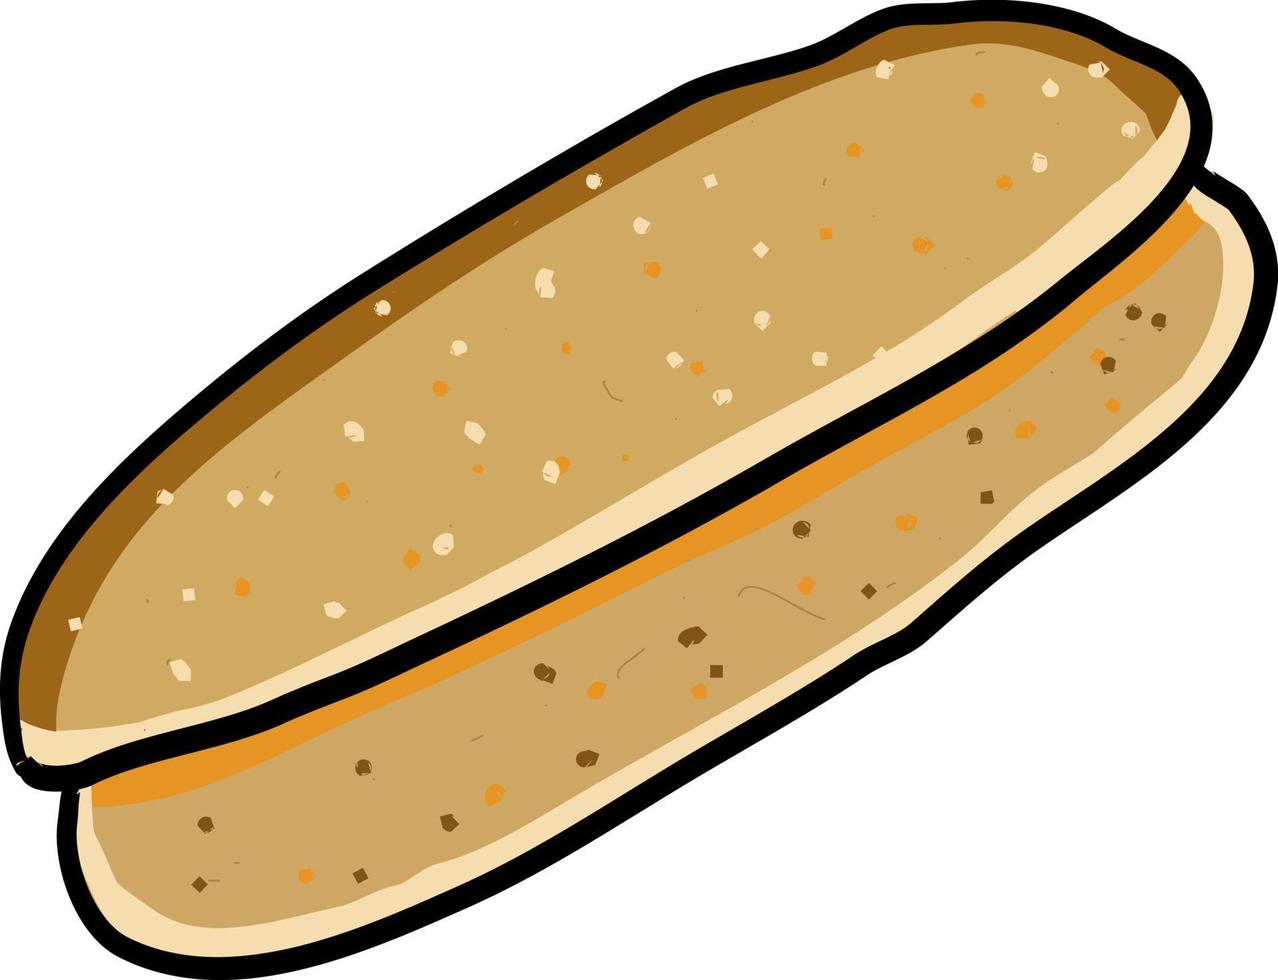 Hot dog bun, illustration, vector on white background.